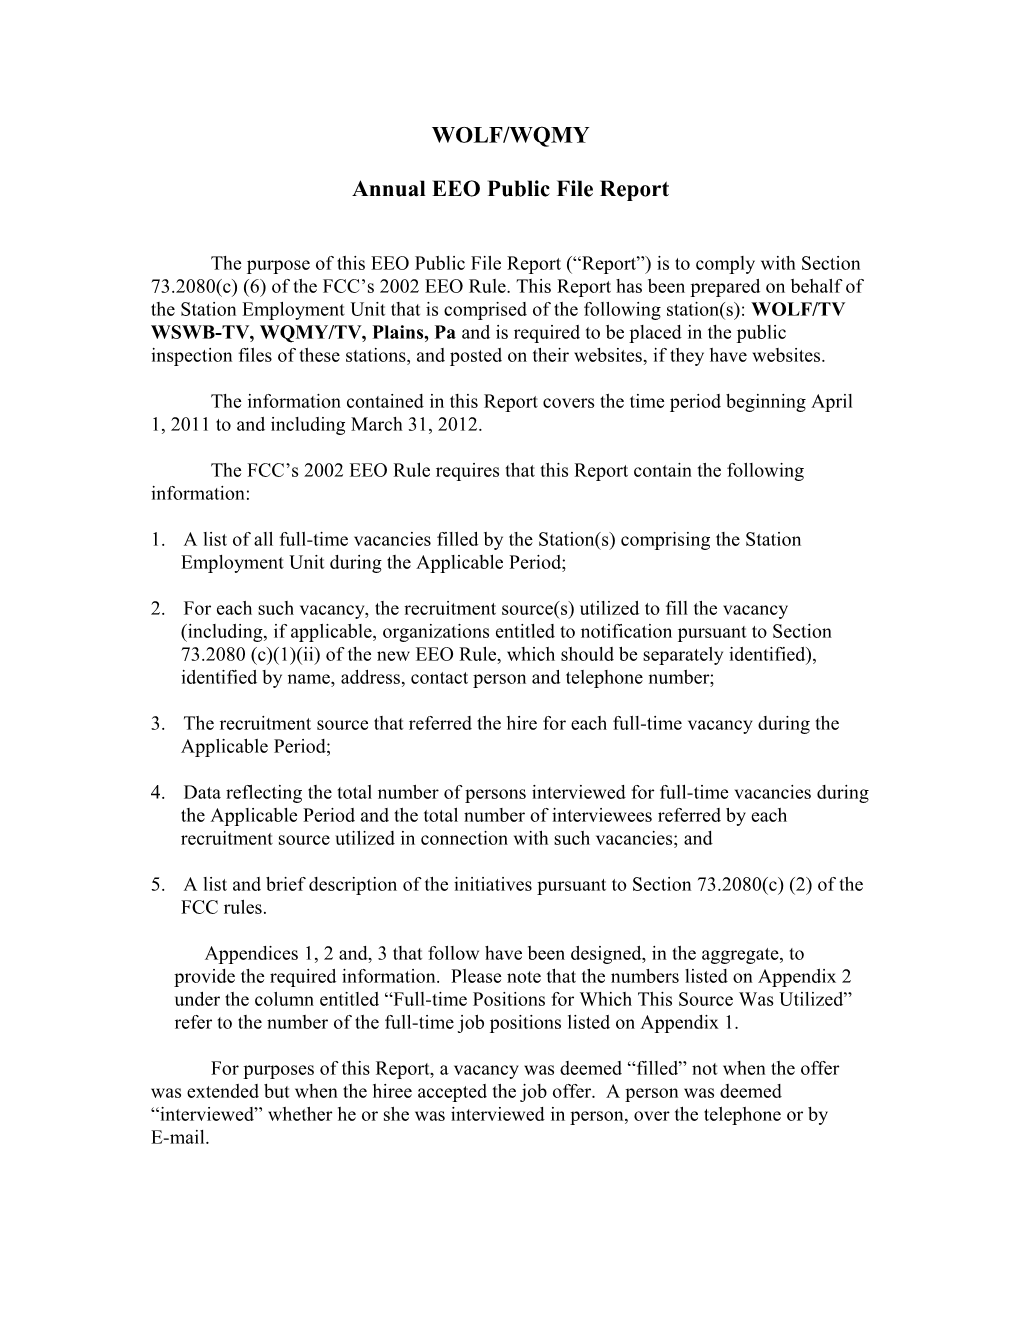 Sample Annual EEO Public File Report Form